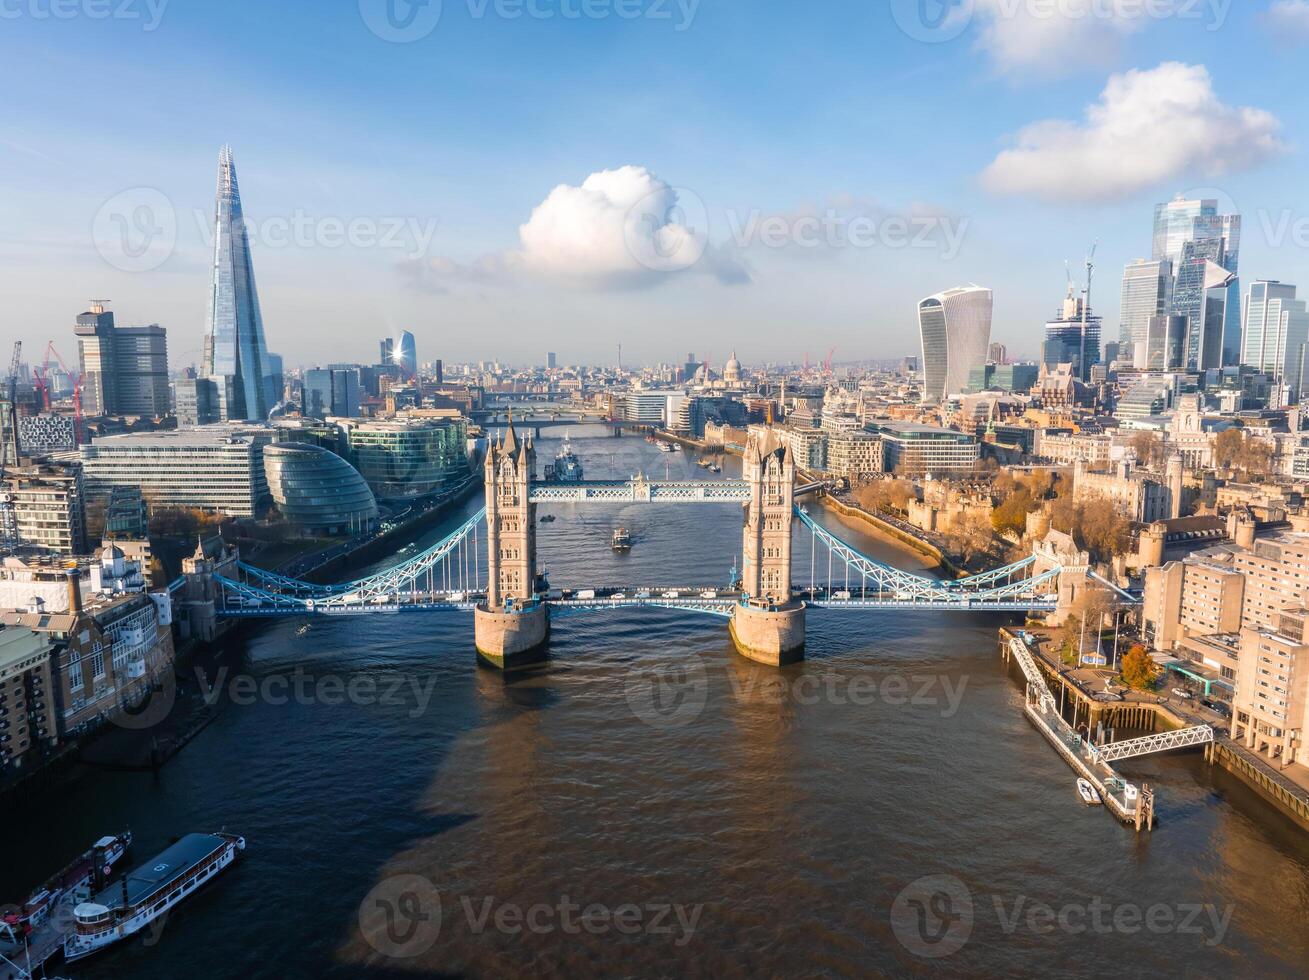 antenn se av de ikoniska torn bro ansluter london med southwark foto